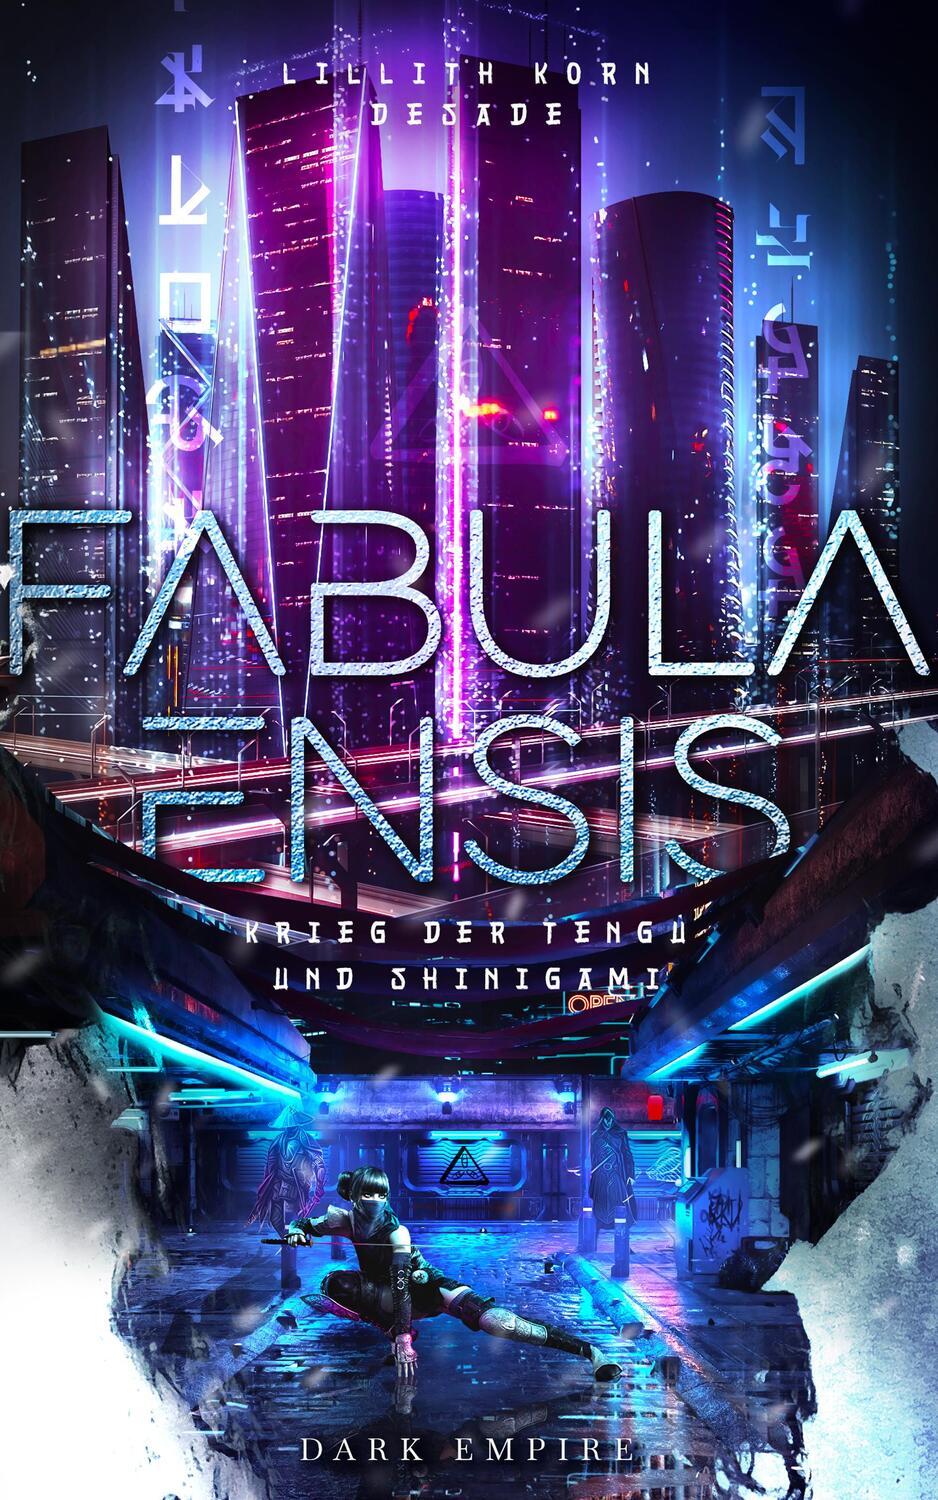 Fabula Ensis - Kucharzak, DeSade